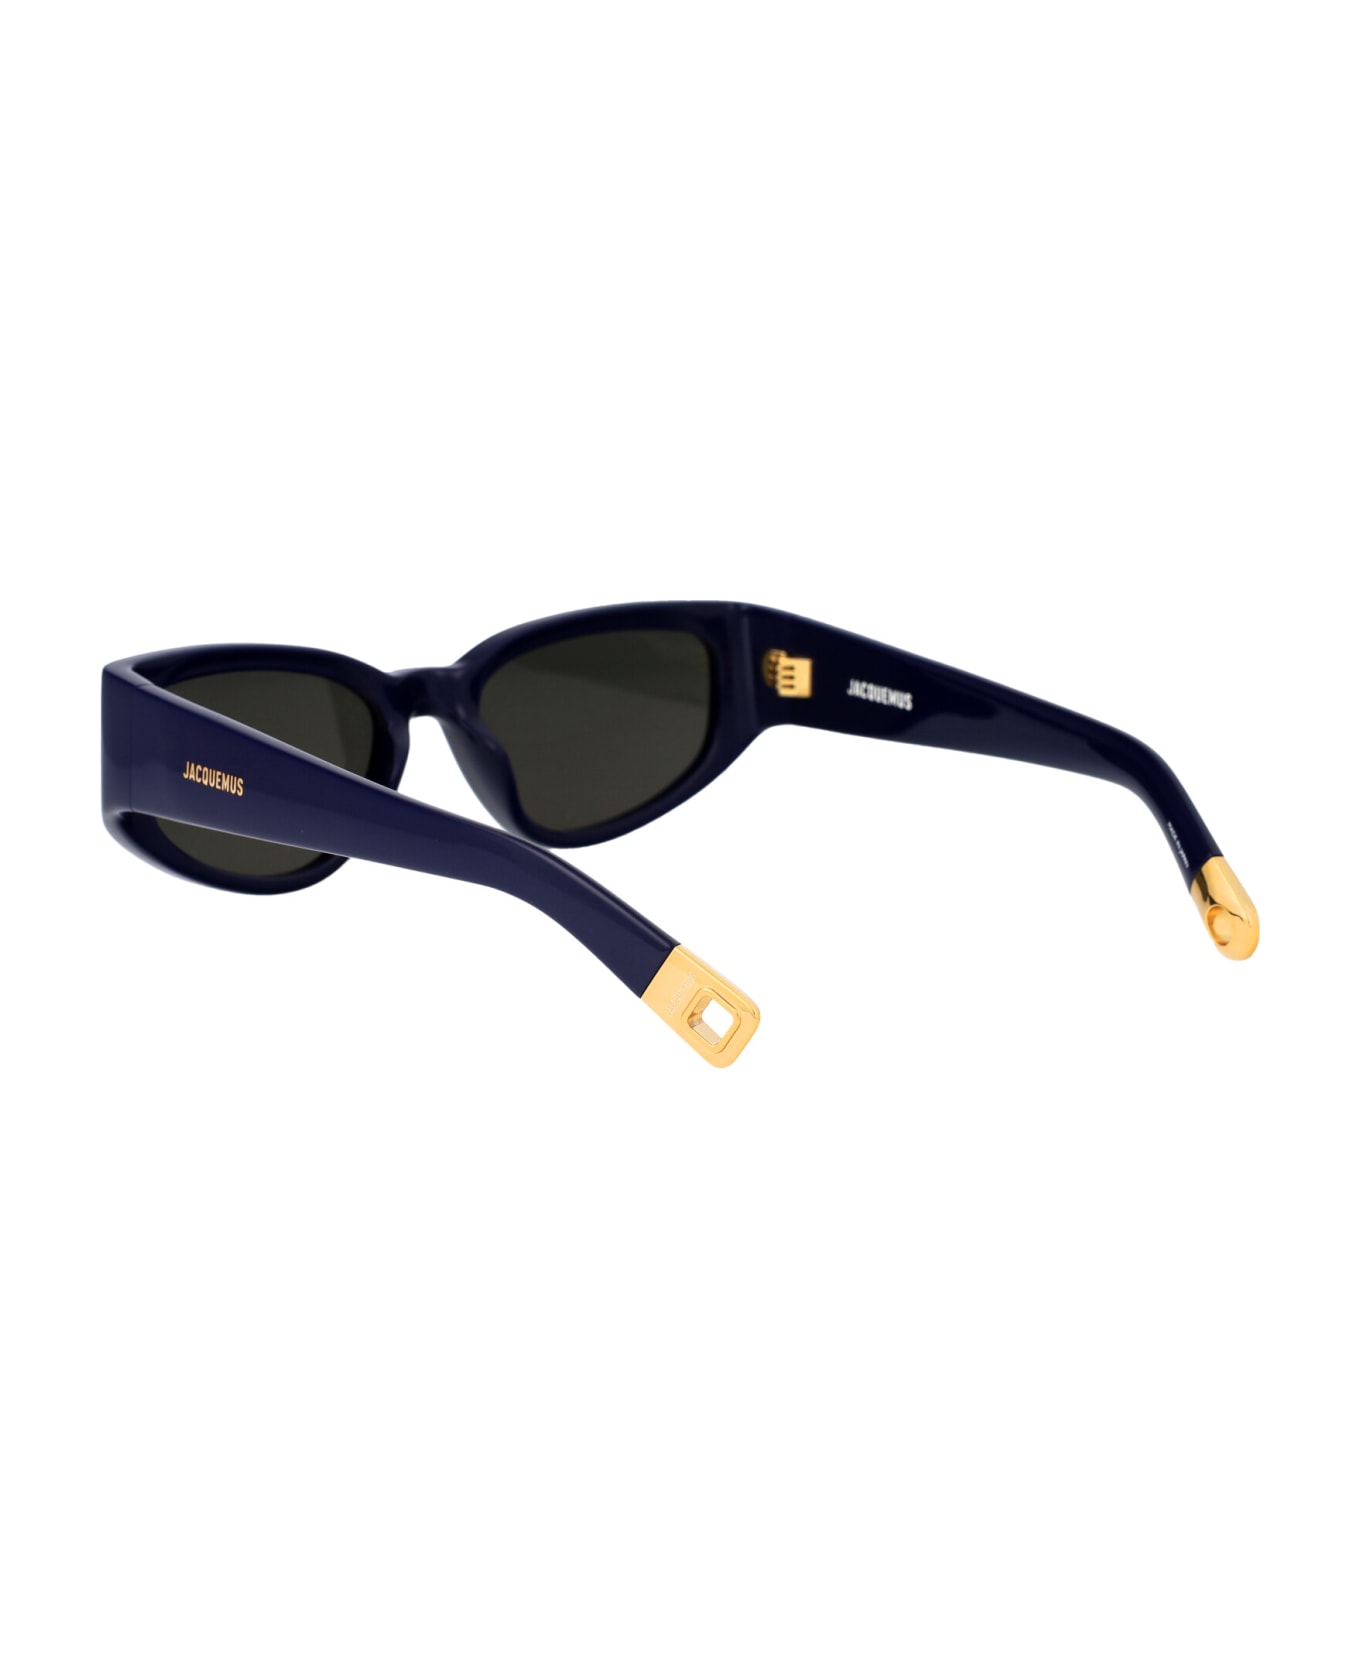 Jacquemus Gala Sunglasses - 04 NAVY/ YELLOW GOLD/ GREY